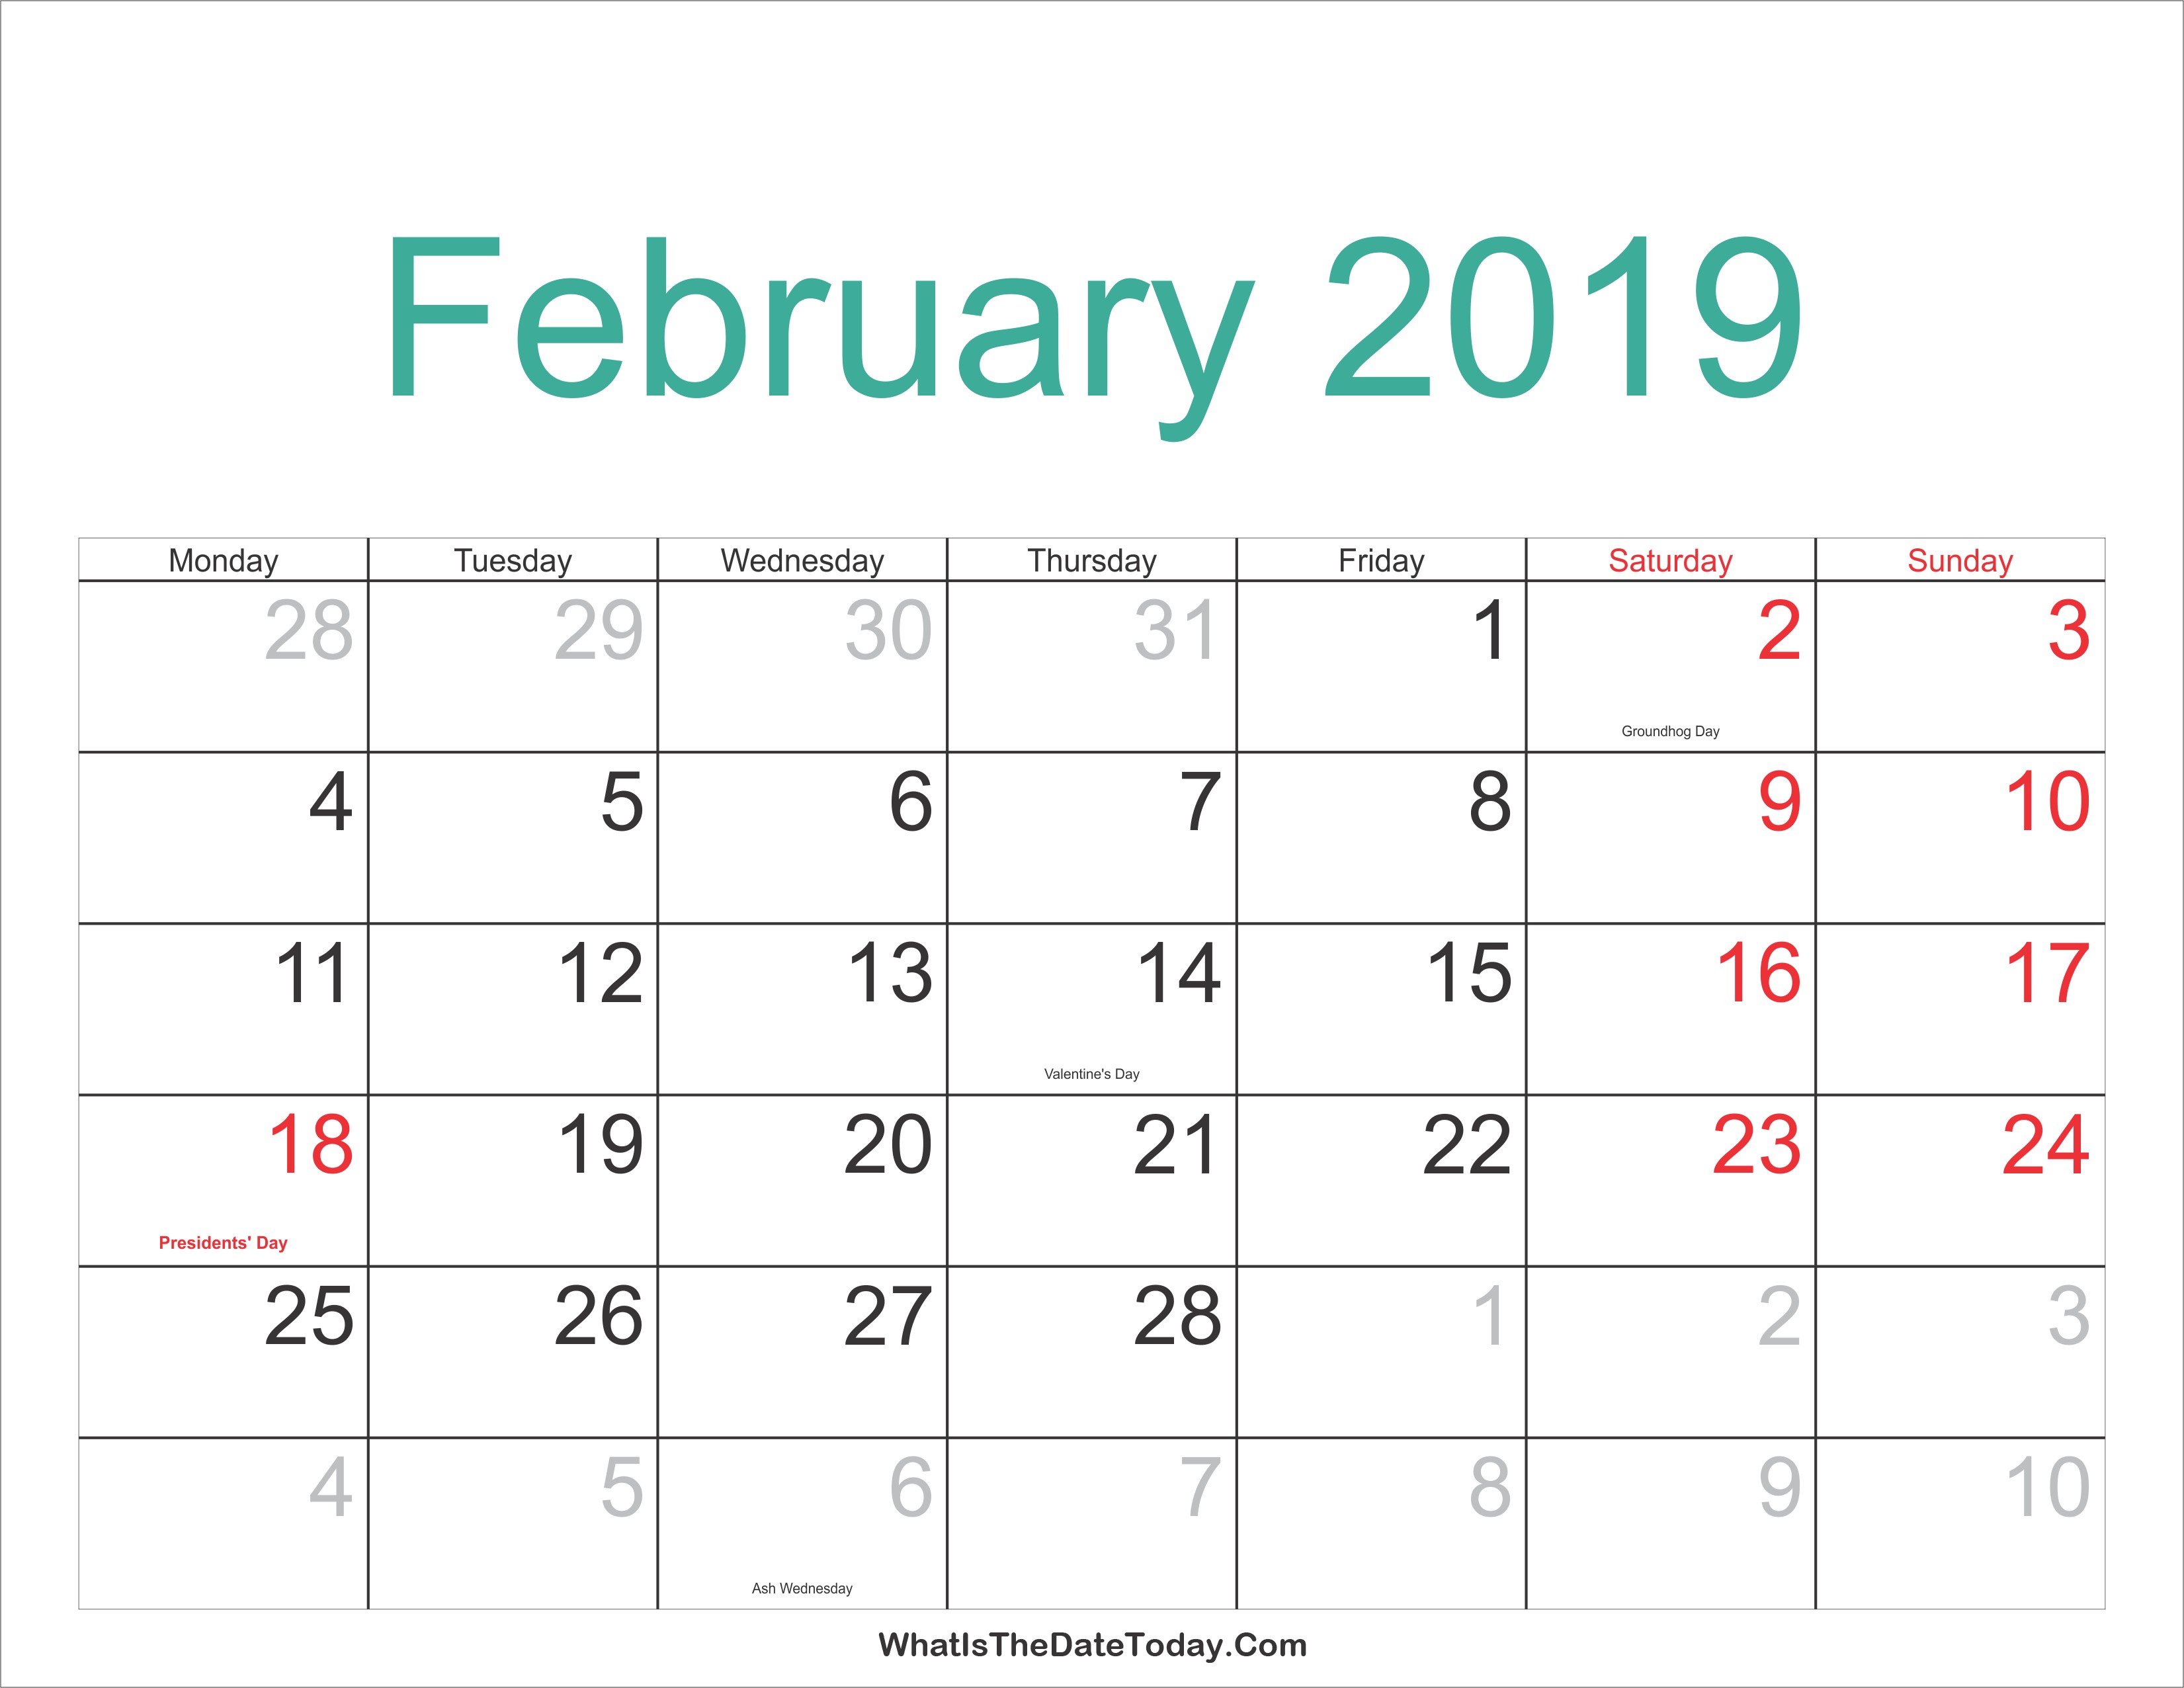 February 2019 Calendar Printable with Holidays